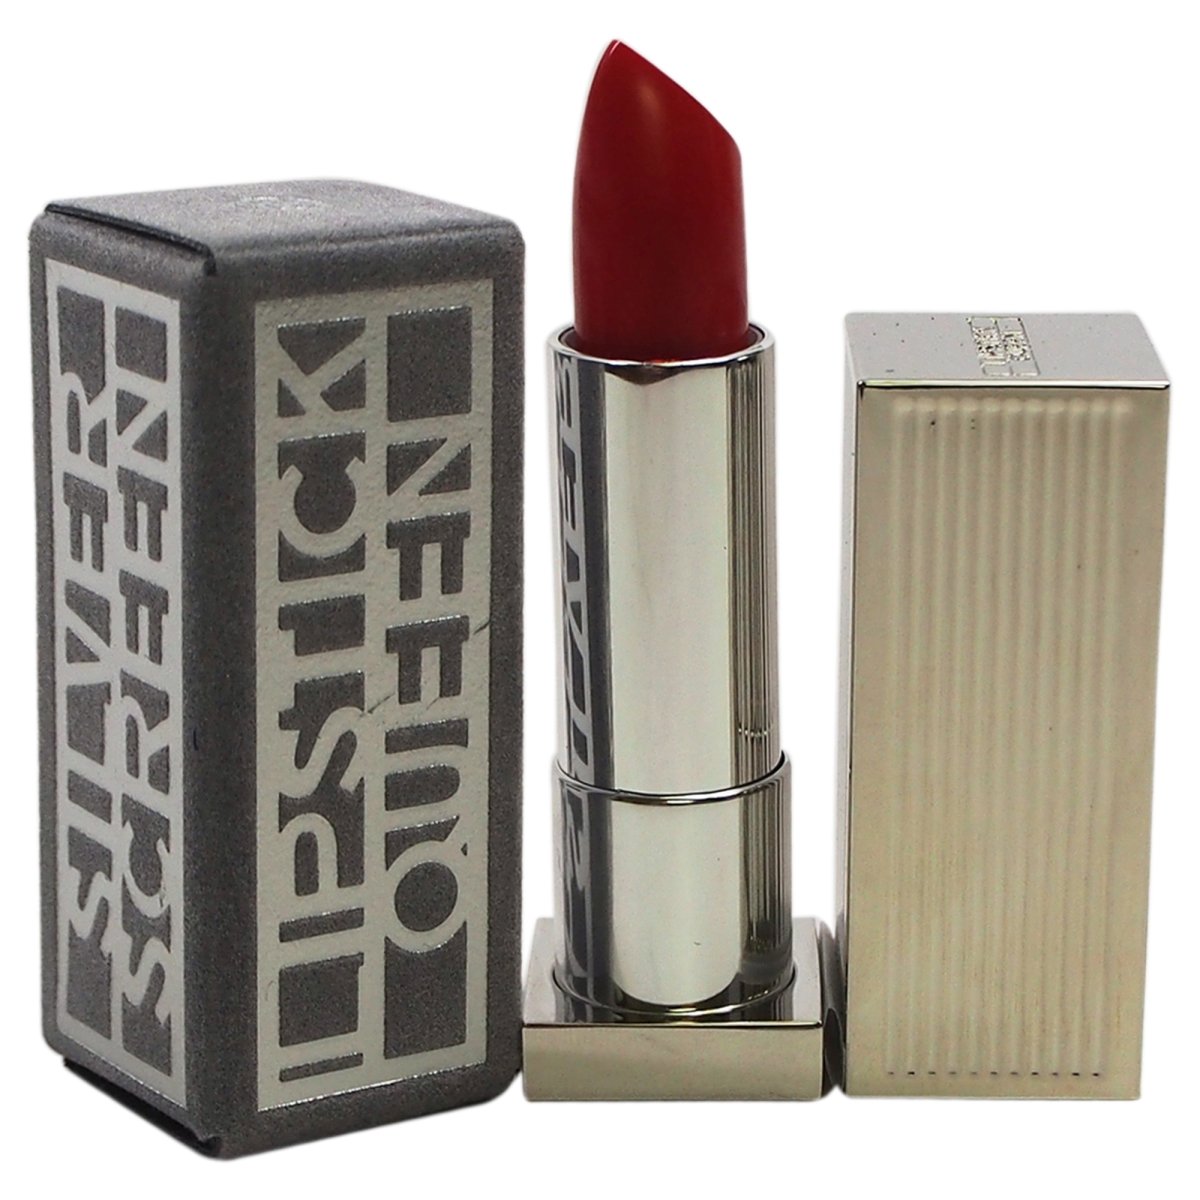 W-c-6727 0.12 Oz Silver Screen Lipstick Have Paris For Women